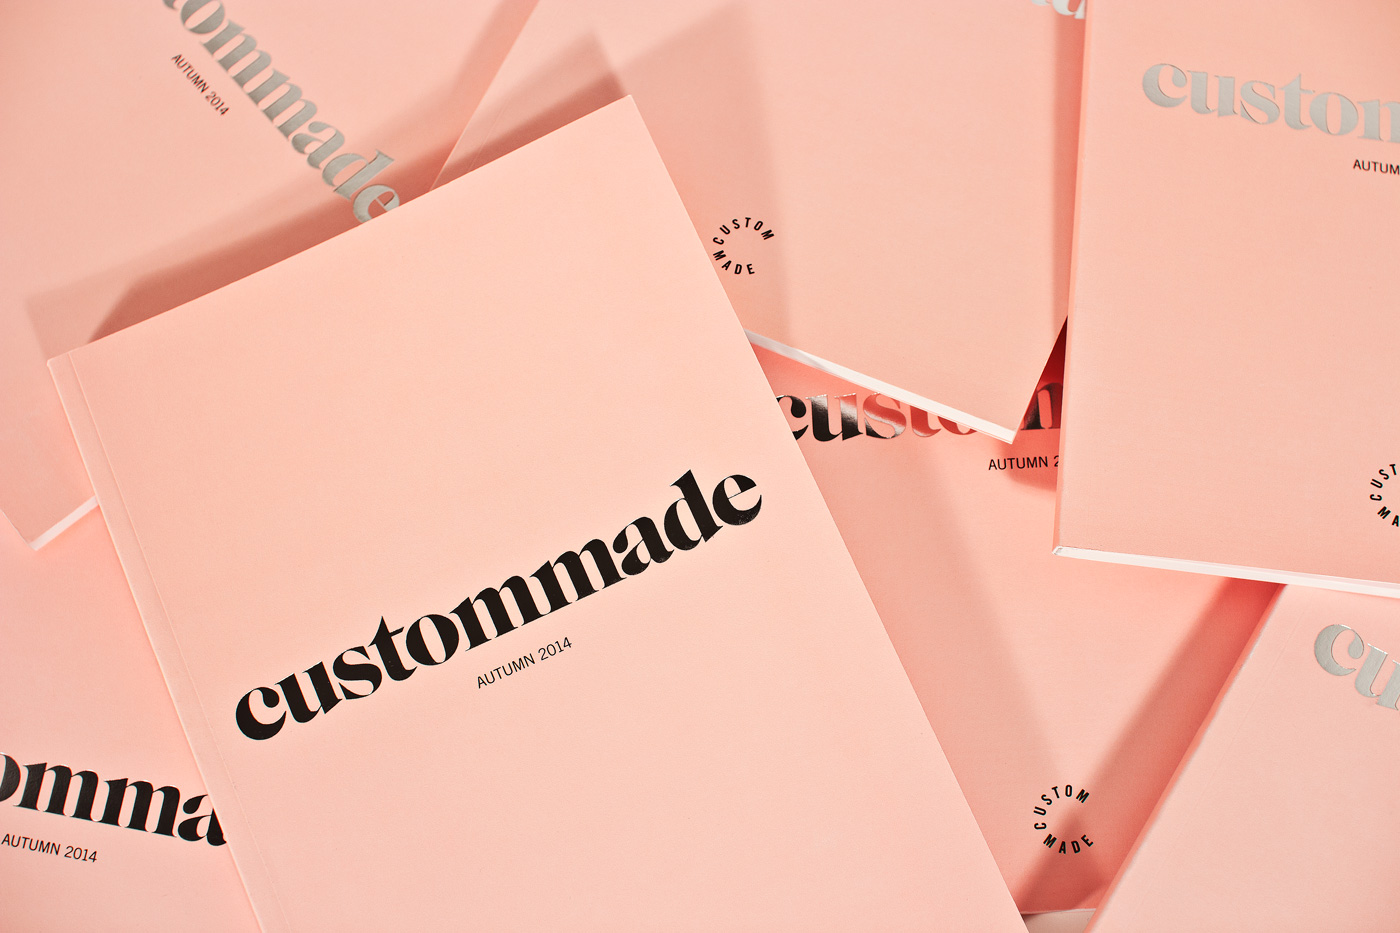 Custommade – Visual identity